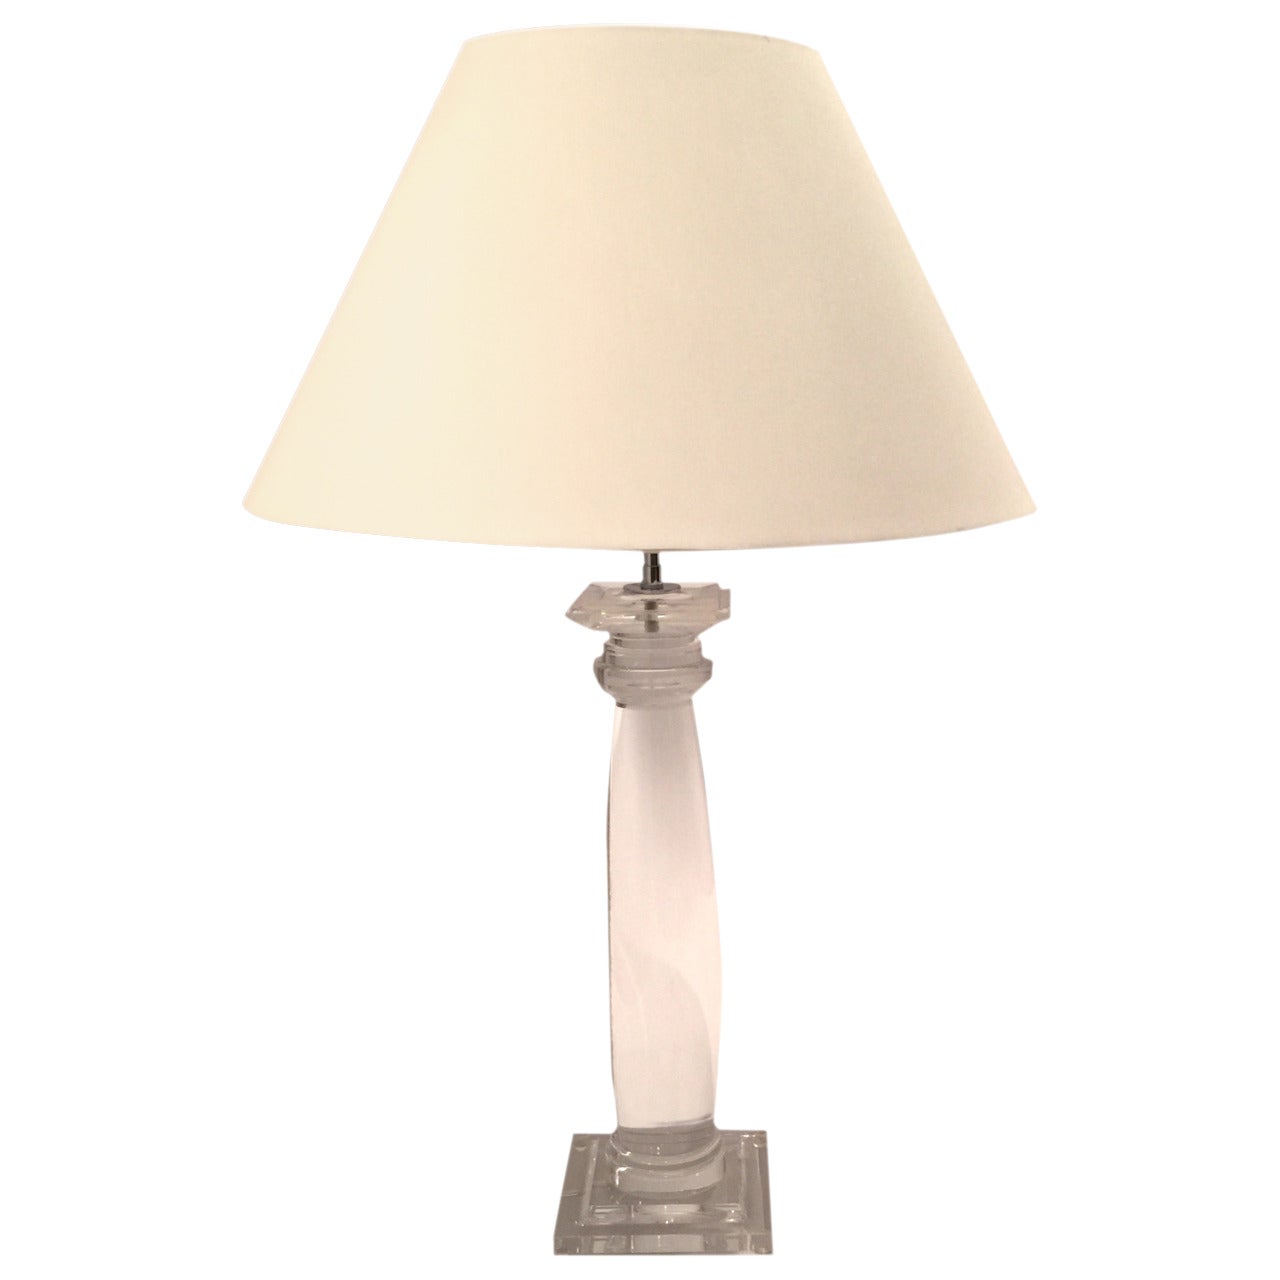 'Greek Column Table Lamp' by Karl Springer For Sale